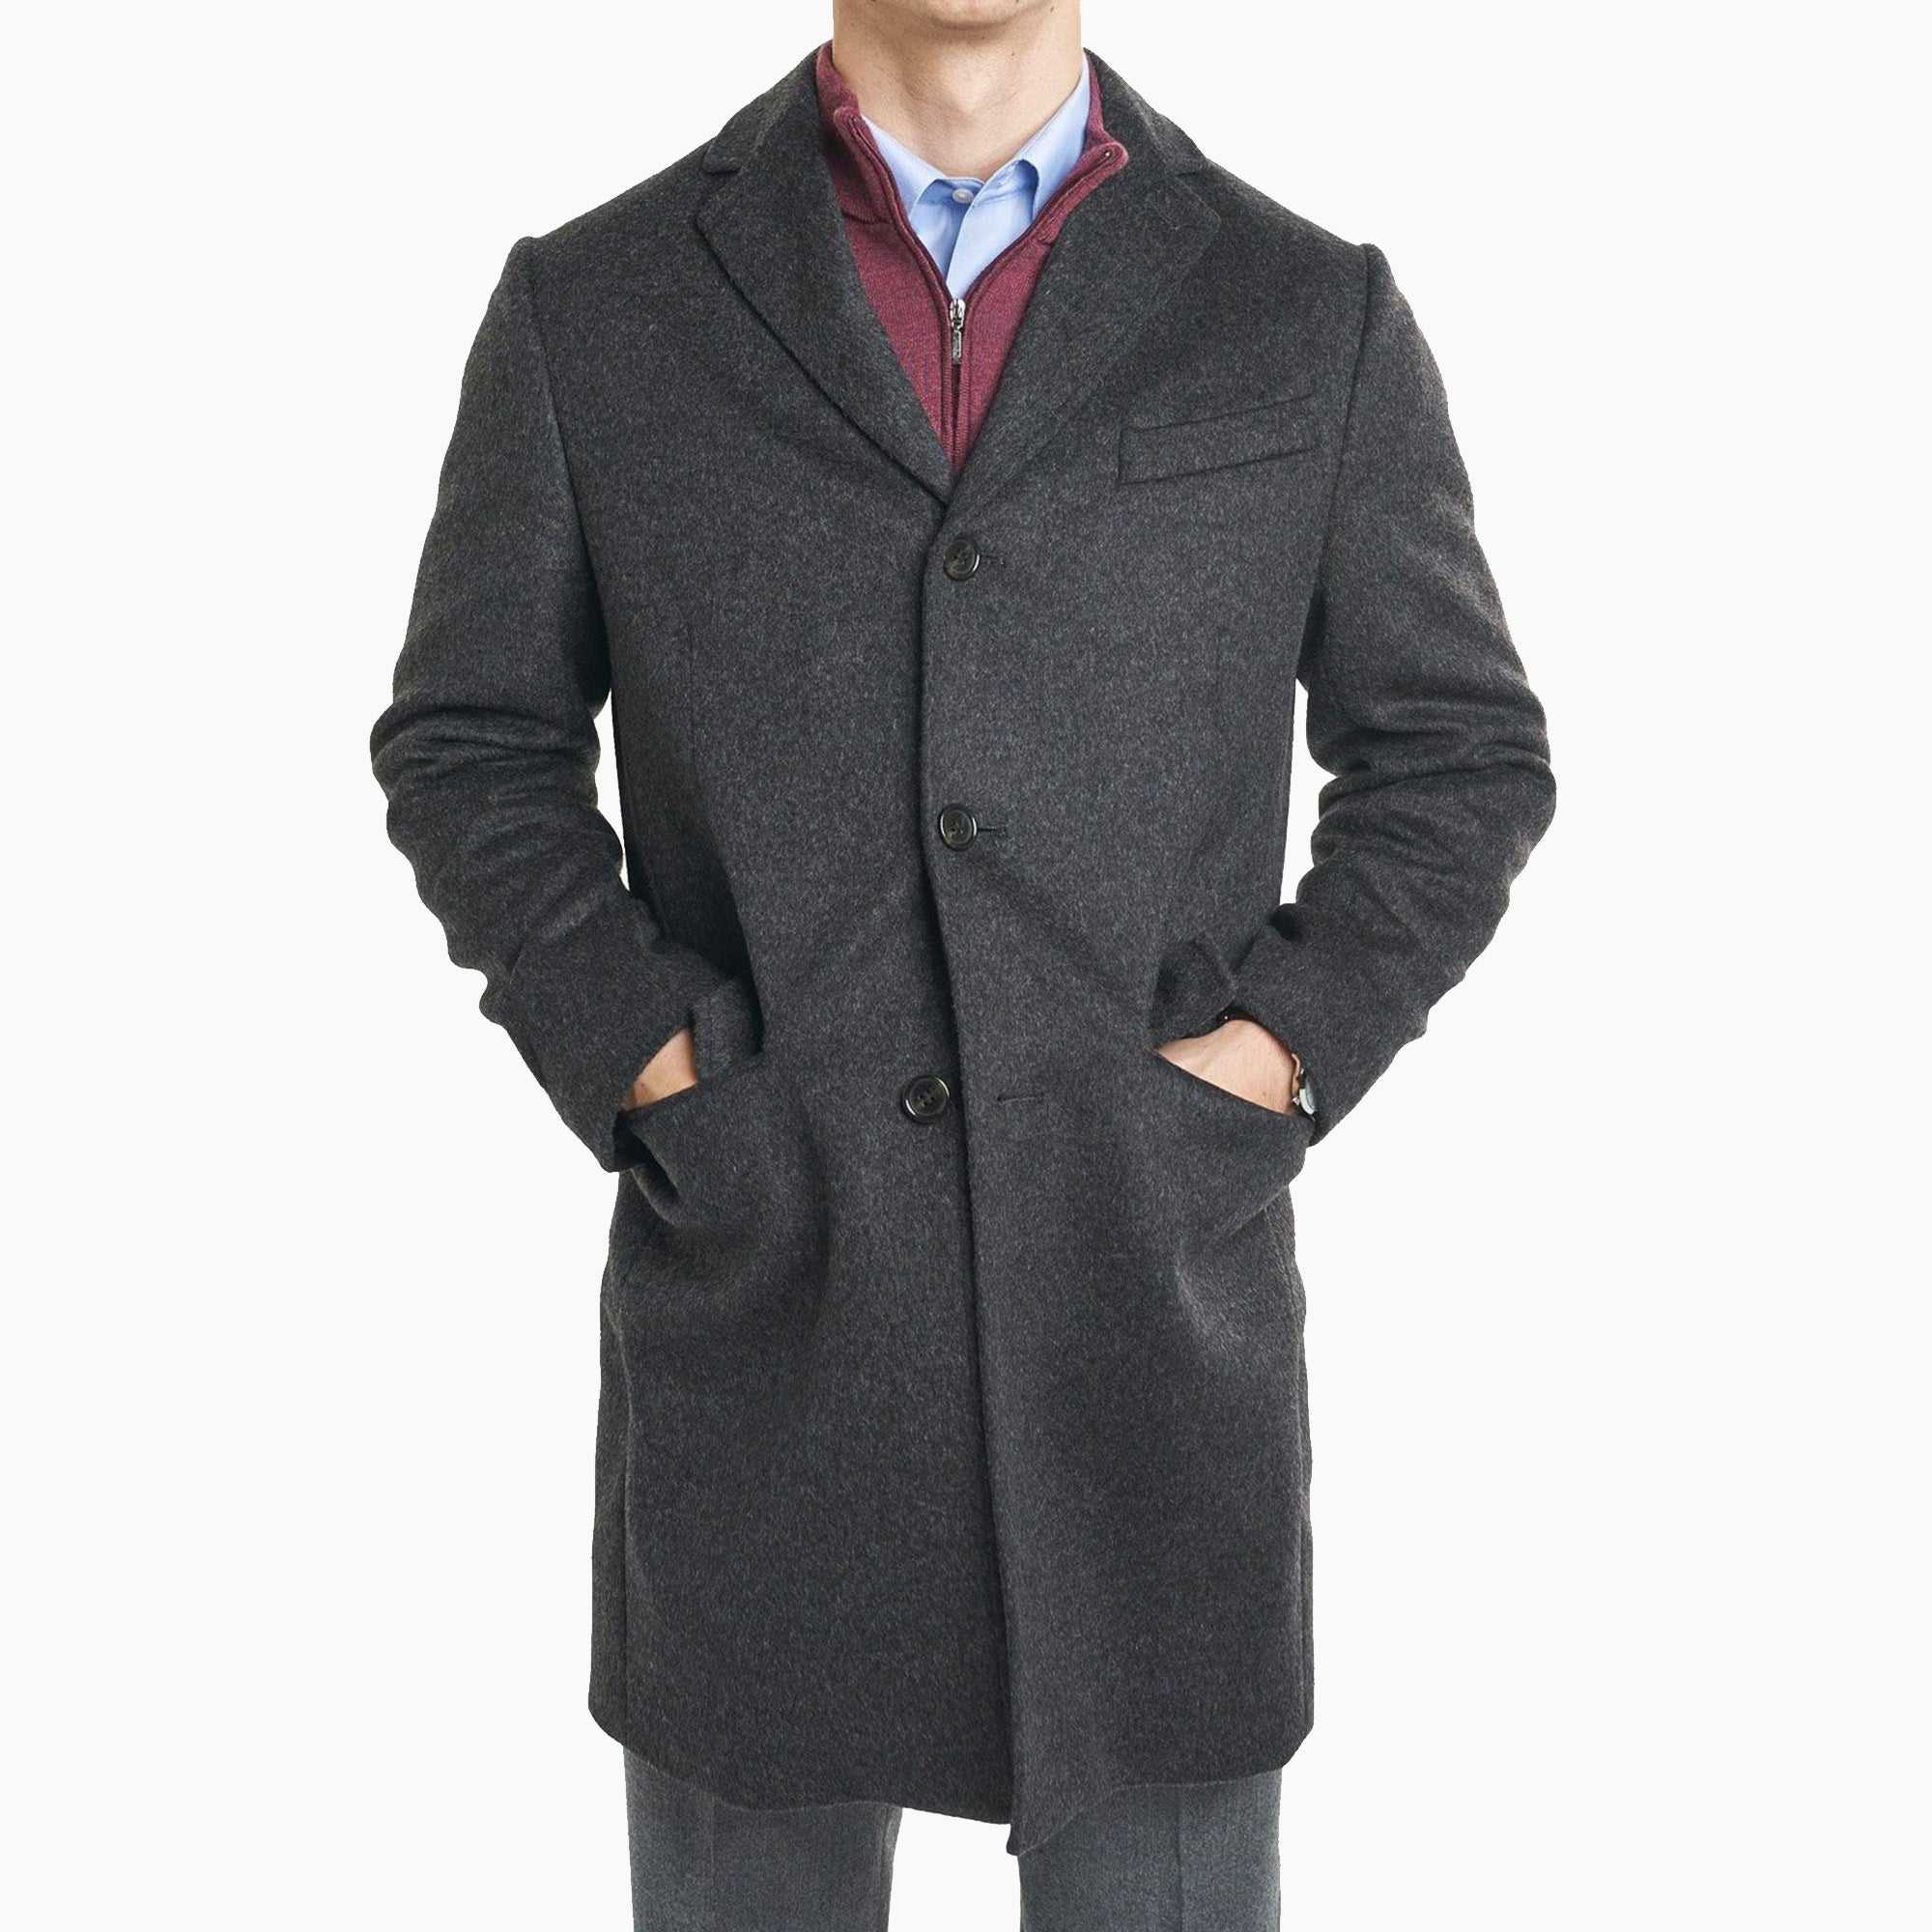 Cashmere Wool Topcoat Grey Black Herringbone - Xxs (US 34-36 / It 44-46)